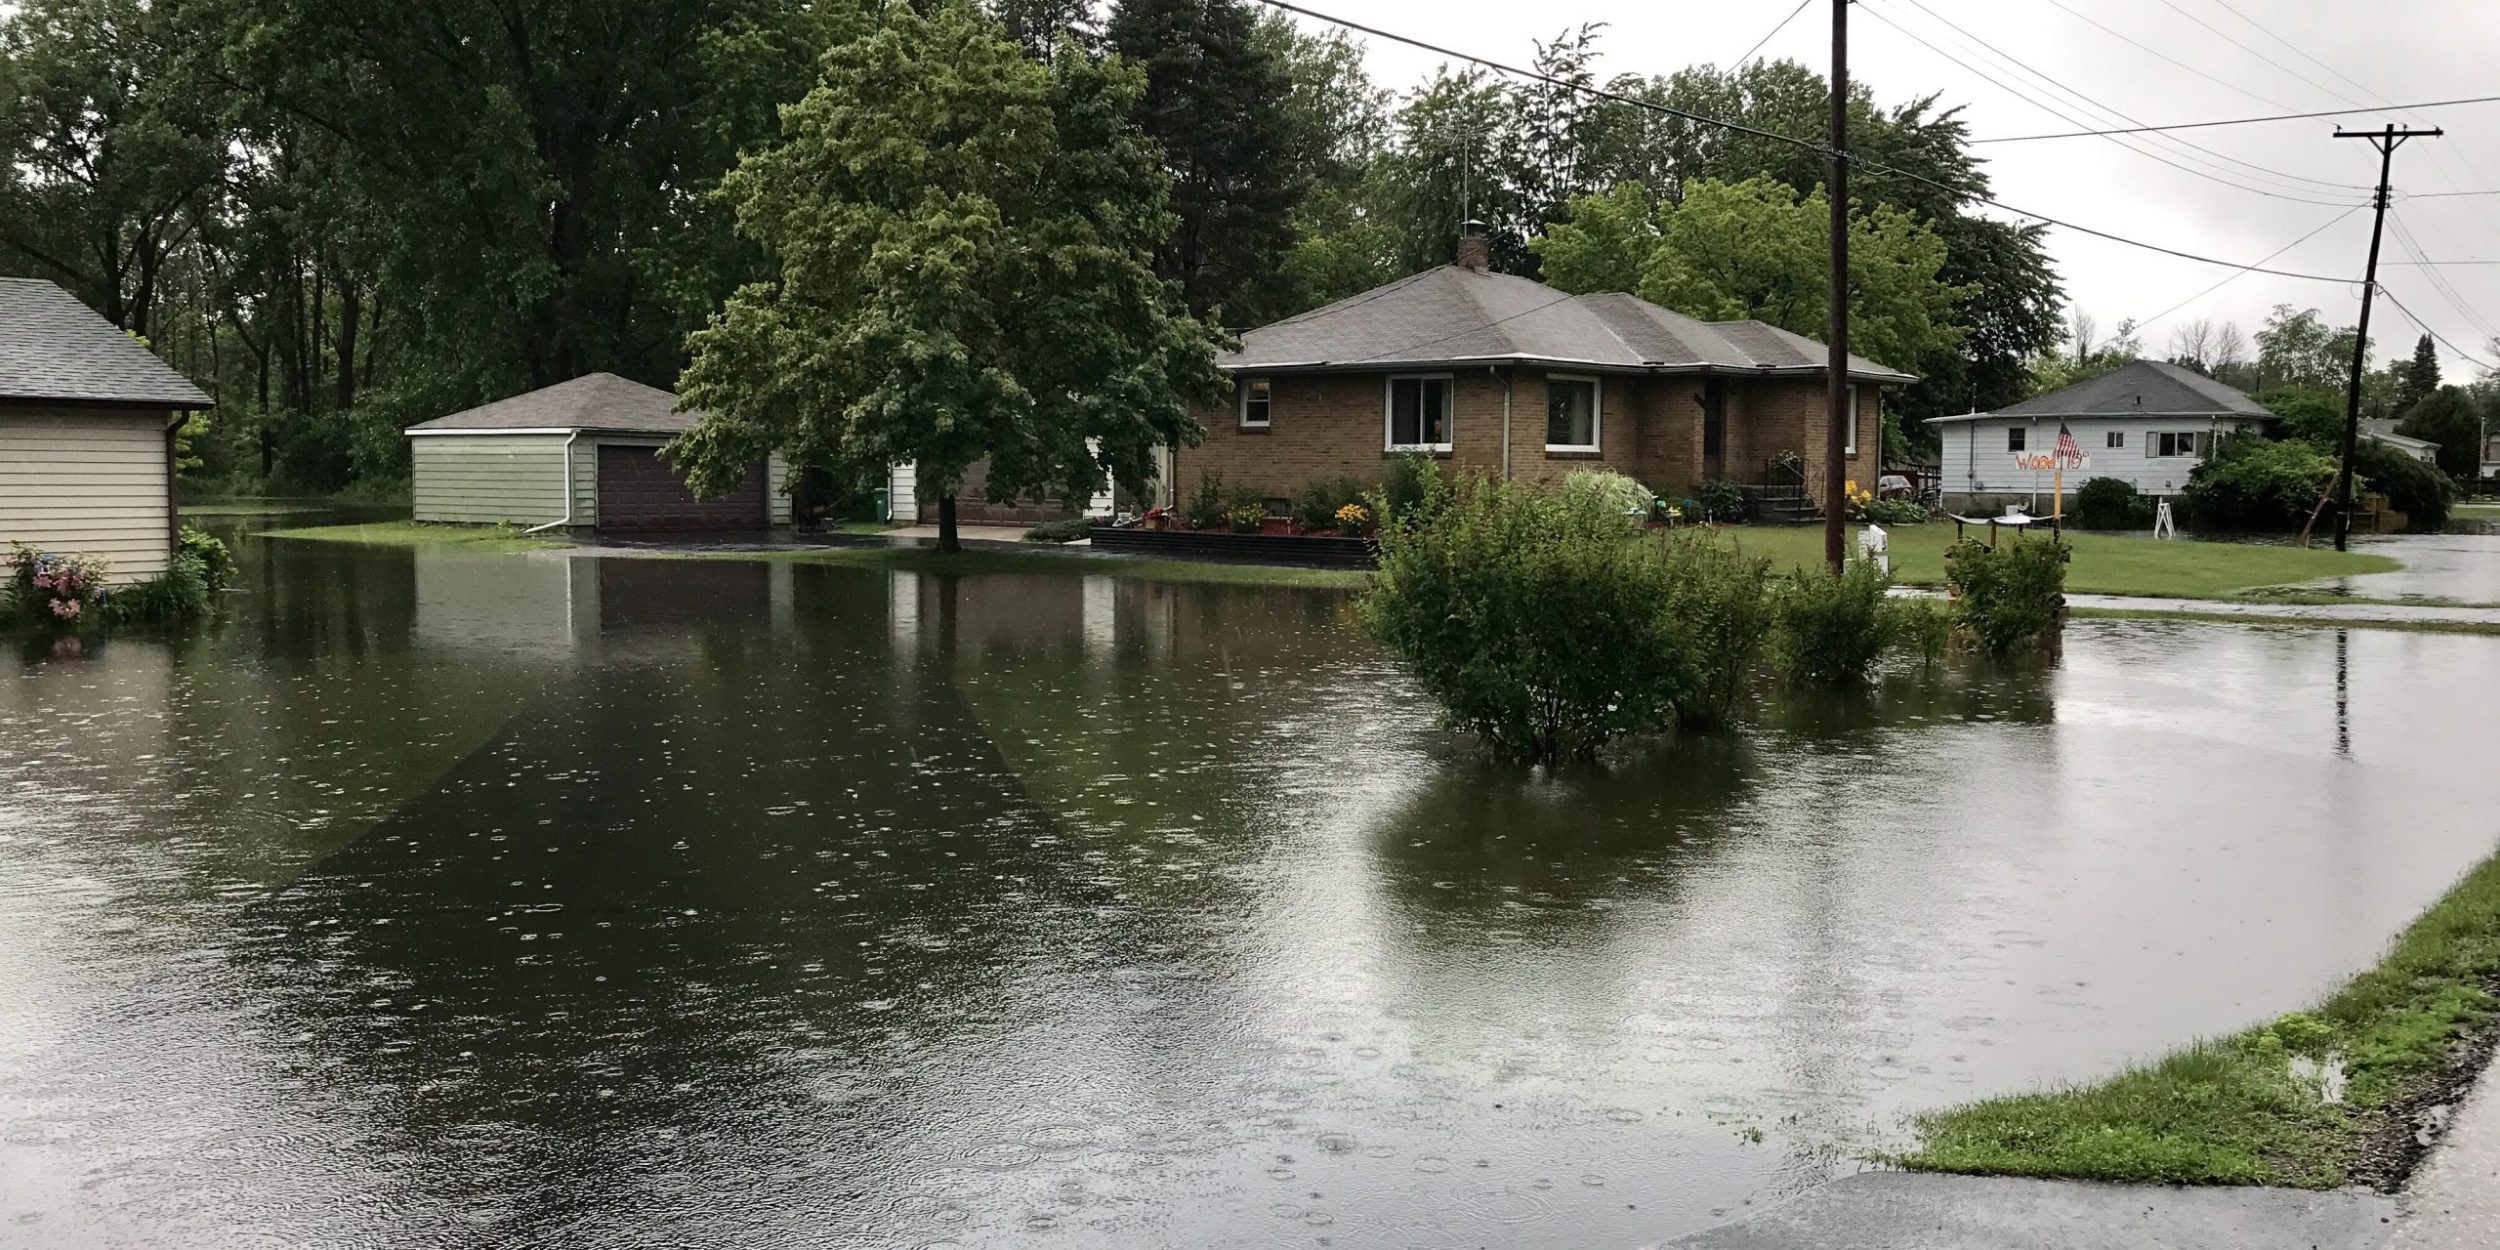 Bay City & Bangor Township, mid-Michigan floods, June 24, 2017